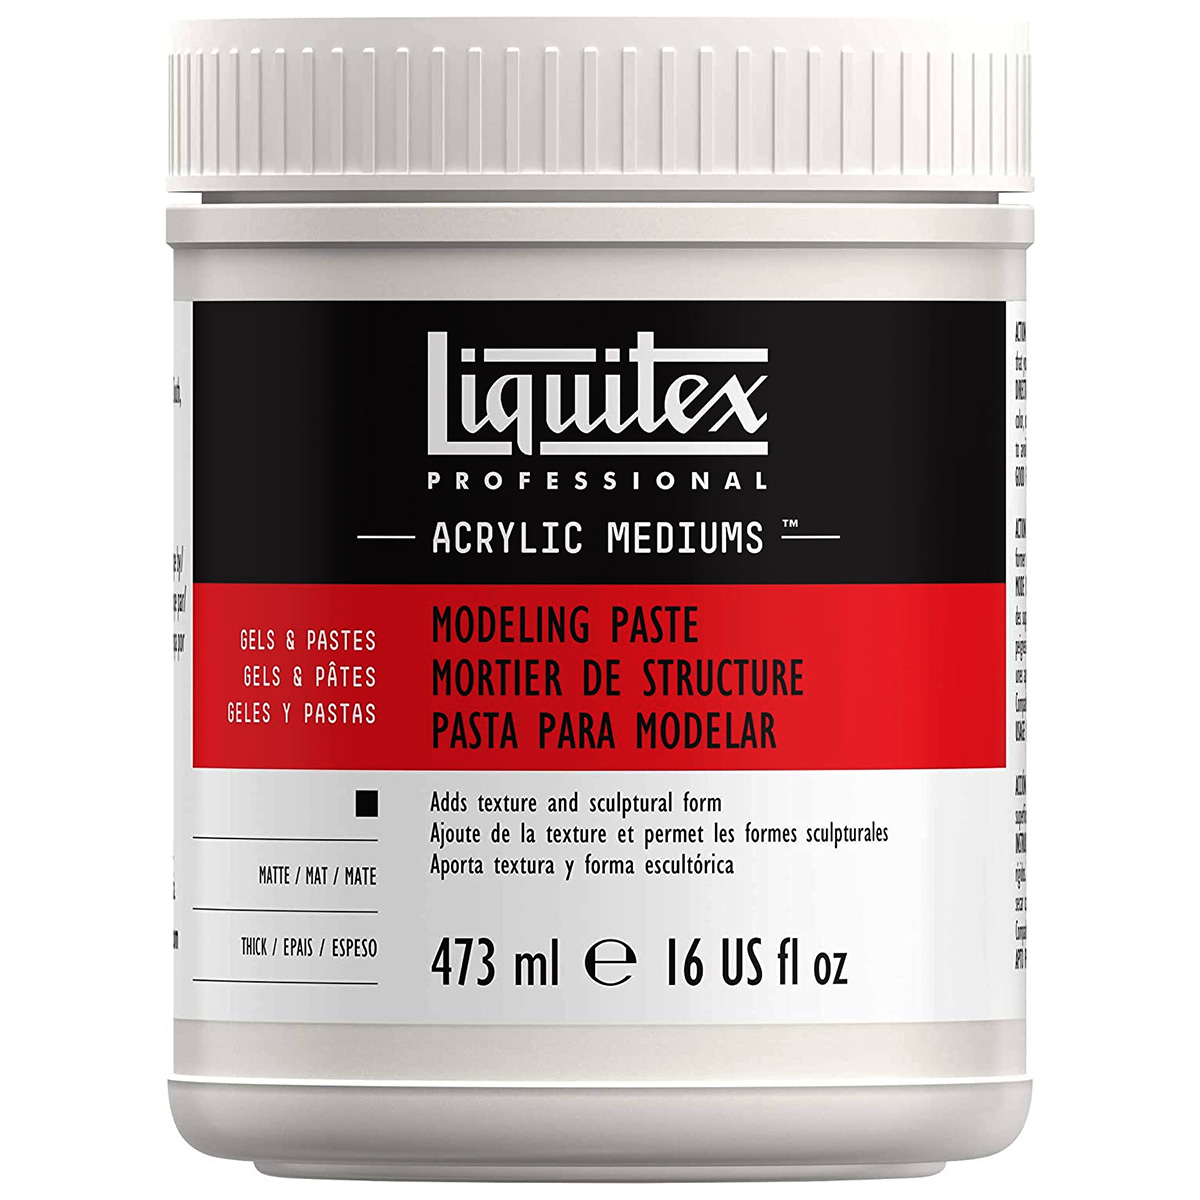 Liquitex Modeling Paste 1 Gallon